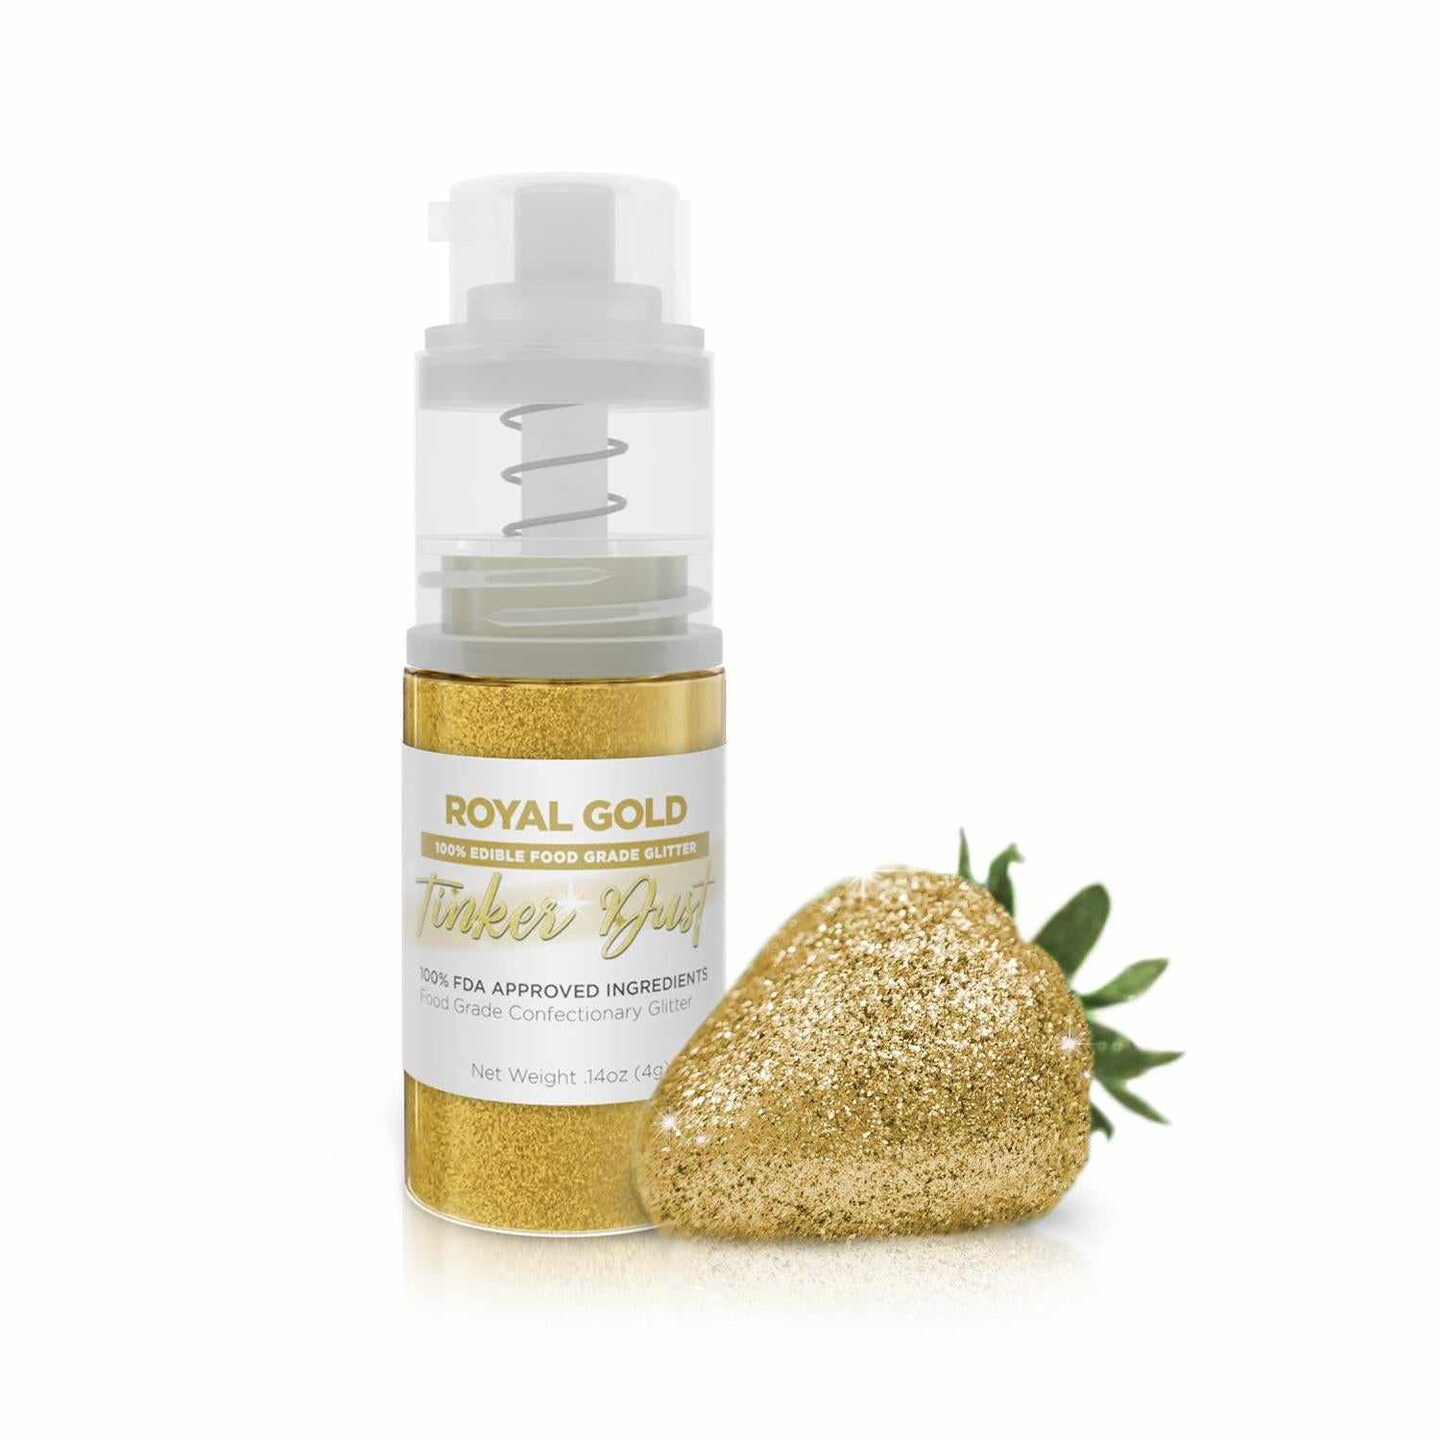 Royal Gold Edible Glitter Spray - Edible Powder Dust Spray Glitter for  Food, Drinks, Strawberries, Muffins, Cake Decorating. FDA Compliant (4 Gram  Pump)